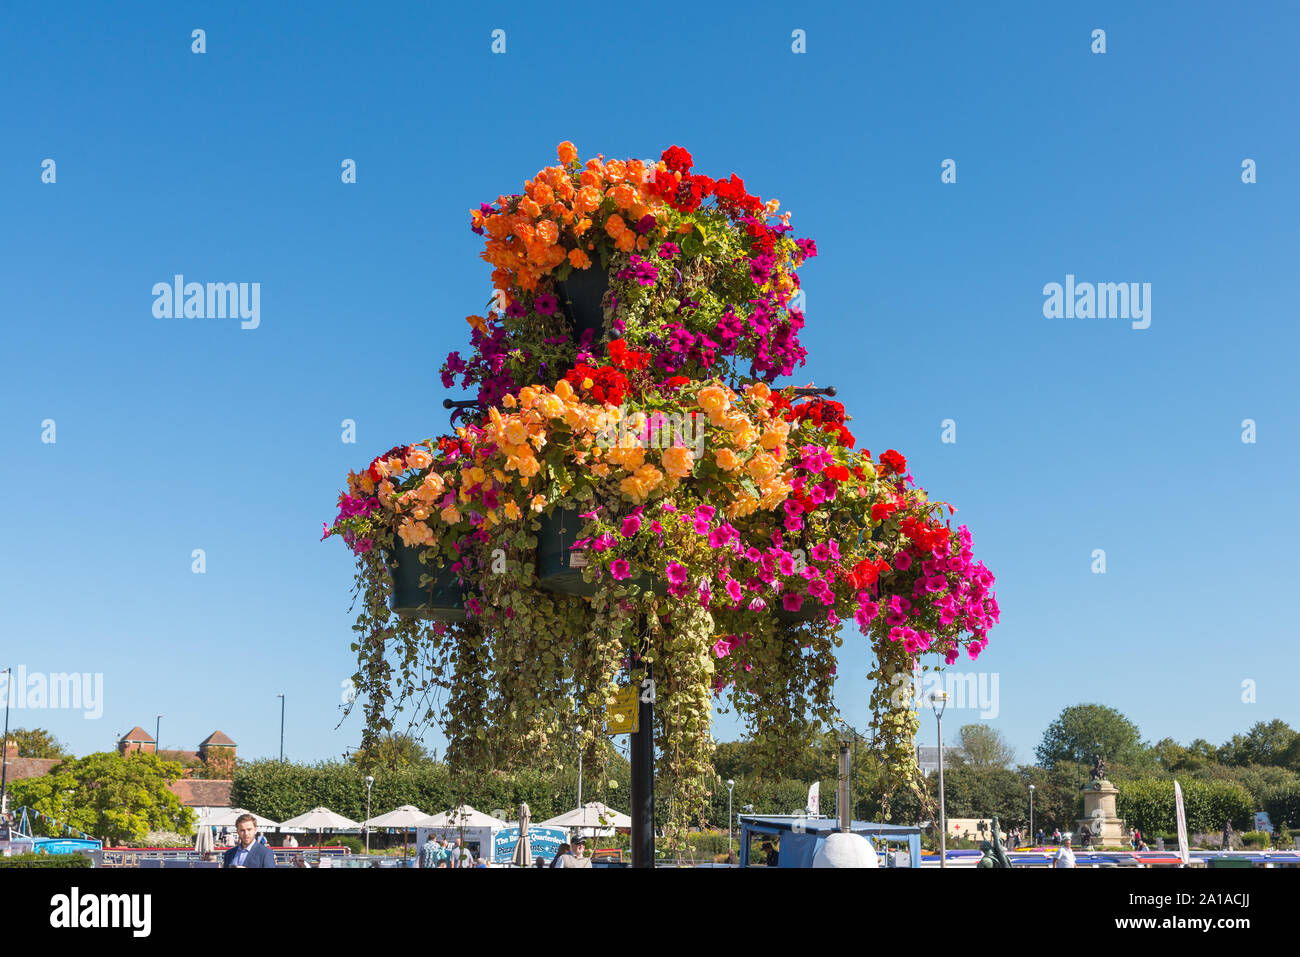 Colourful hanging basket displays on posts in late summer sunshine in Stratford-upon-Avon, Warwickshire, UK Stock Photo